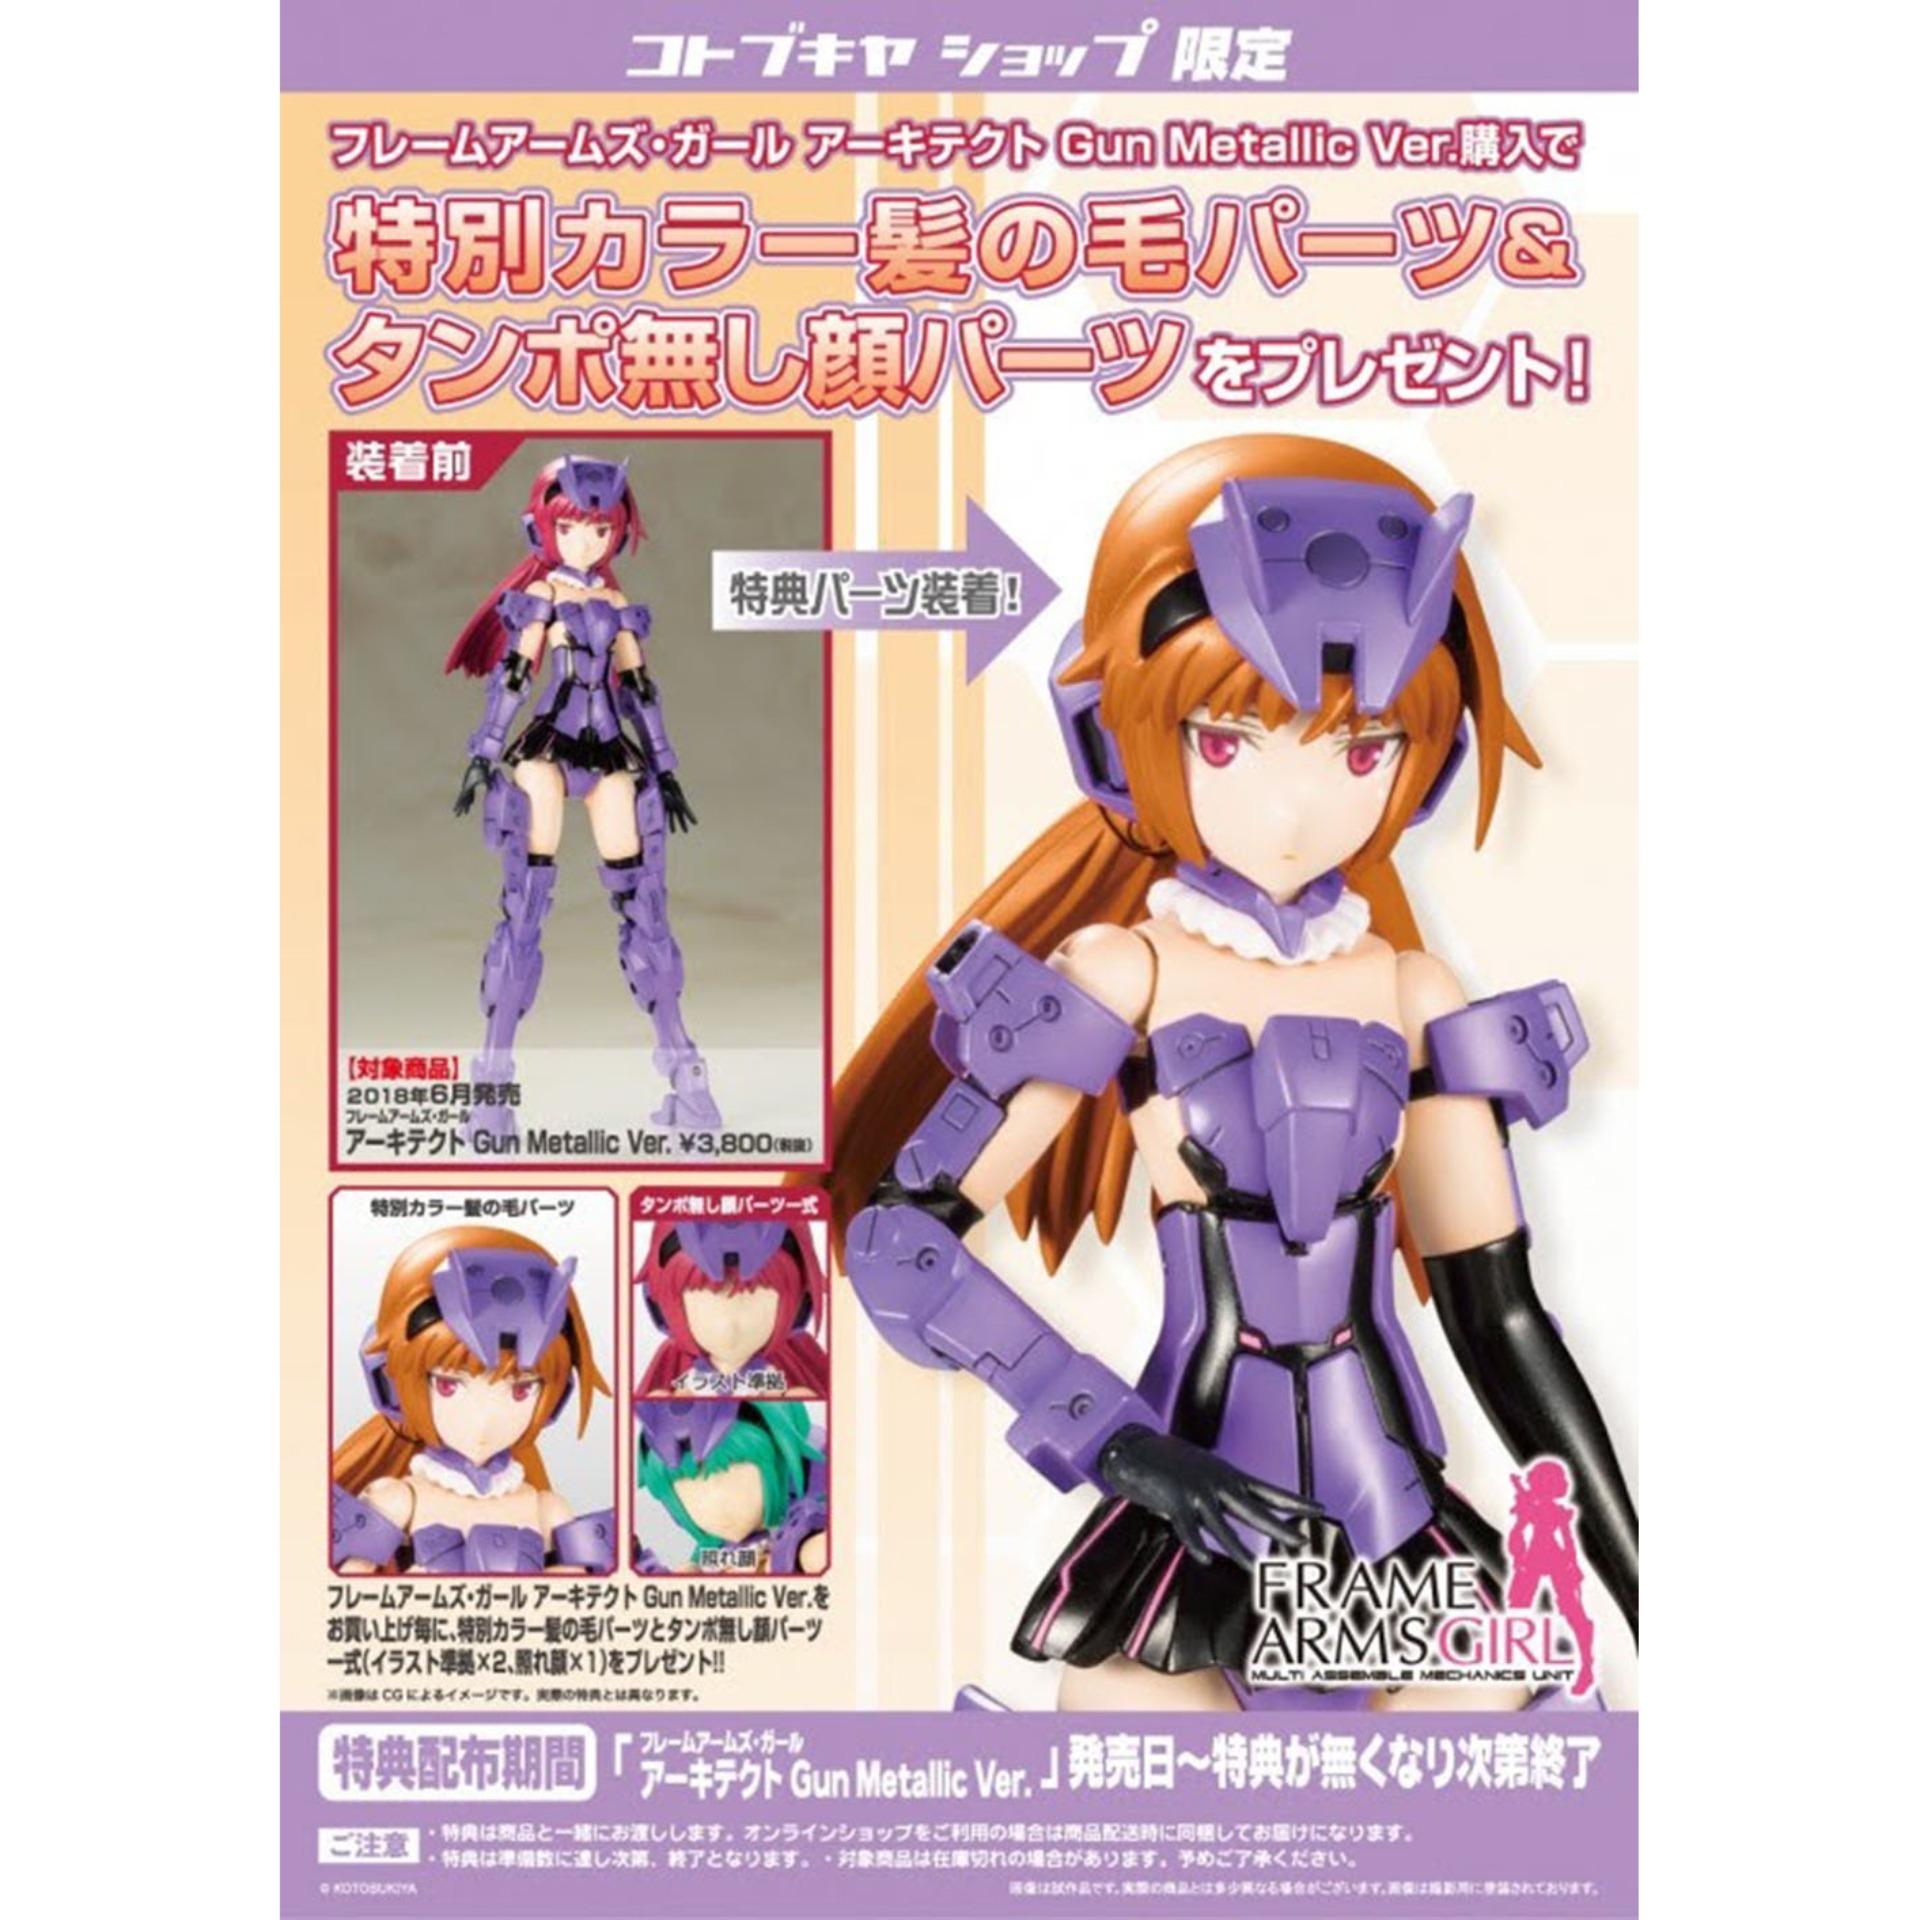 Model โมเดล งานแท้ 100% Kotobukiya Frame Arms Girl Architect Gun Metallic Ver Figma ฟิกม่า Anime ขยับแขน-ขาได้ ของขวัญ Gift ของสะสมหายาก อนิเมะ การ์ตูน มังงะ Doll ตุ๊กตา สั่งและนำเข้าจากญี่ปุ่น manga Figure ฟิกเกอร์